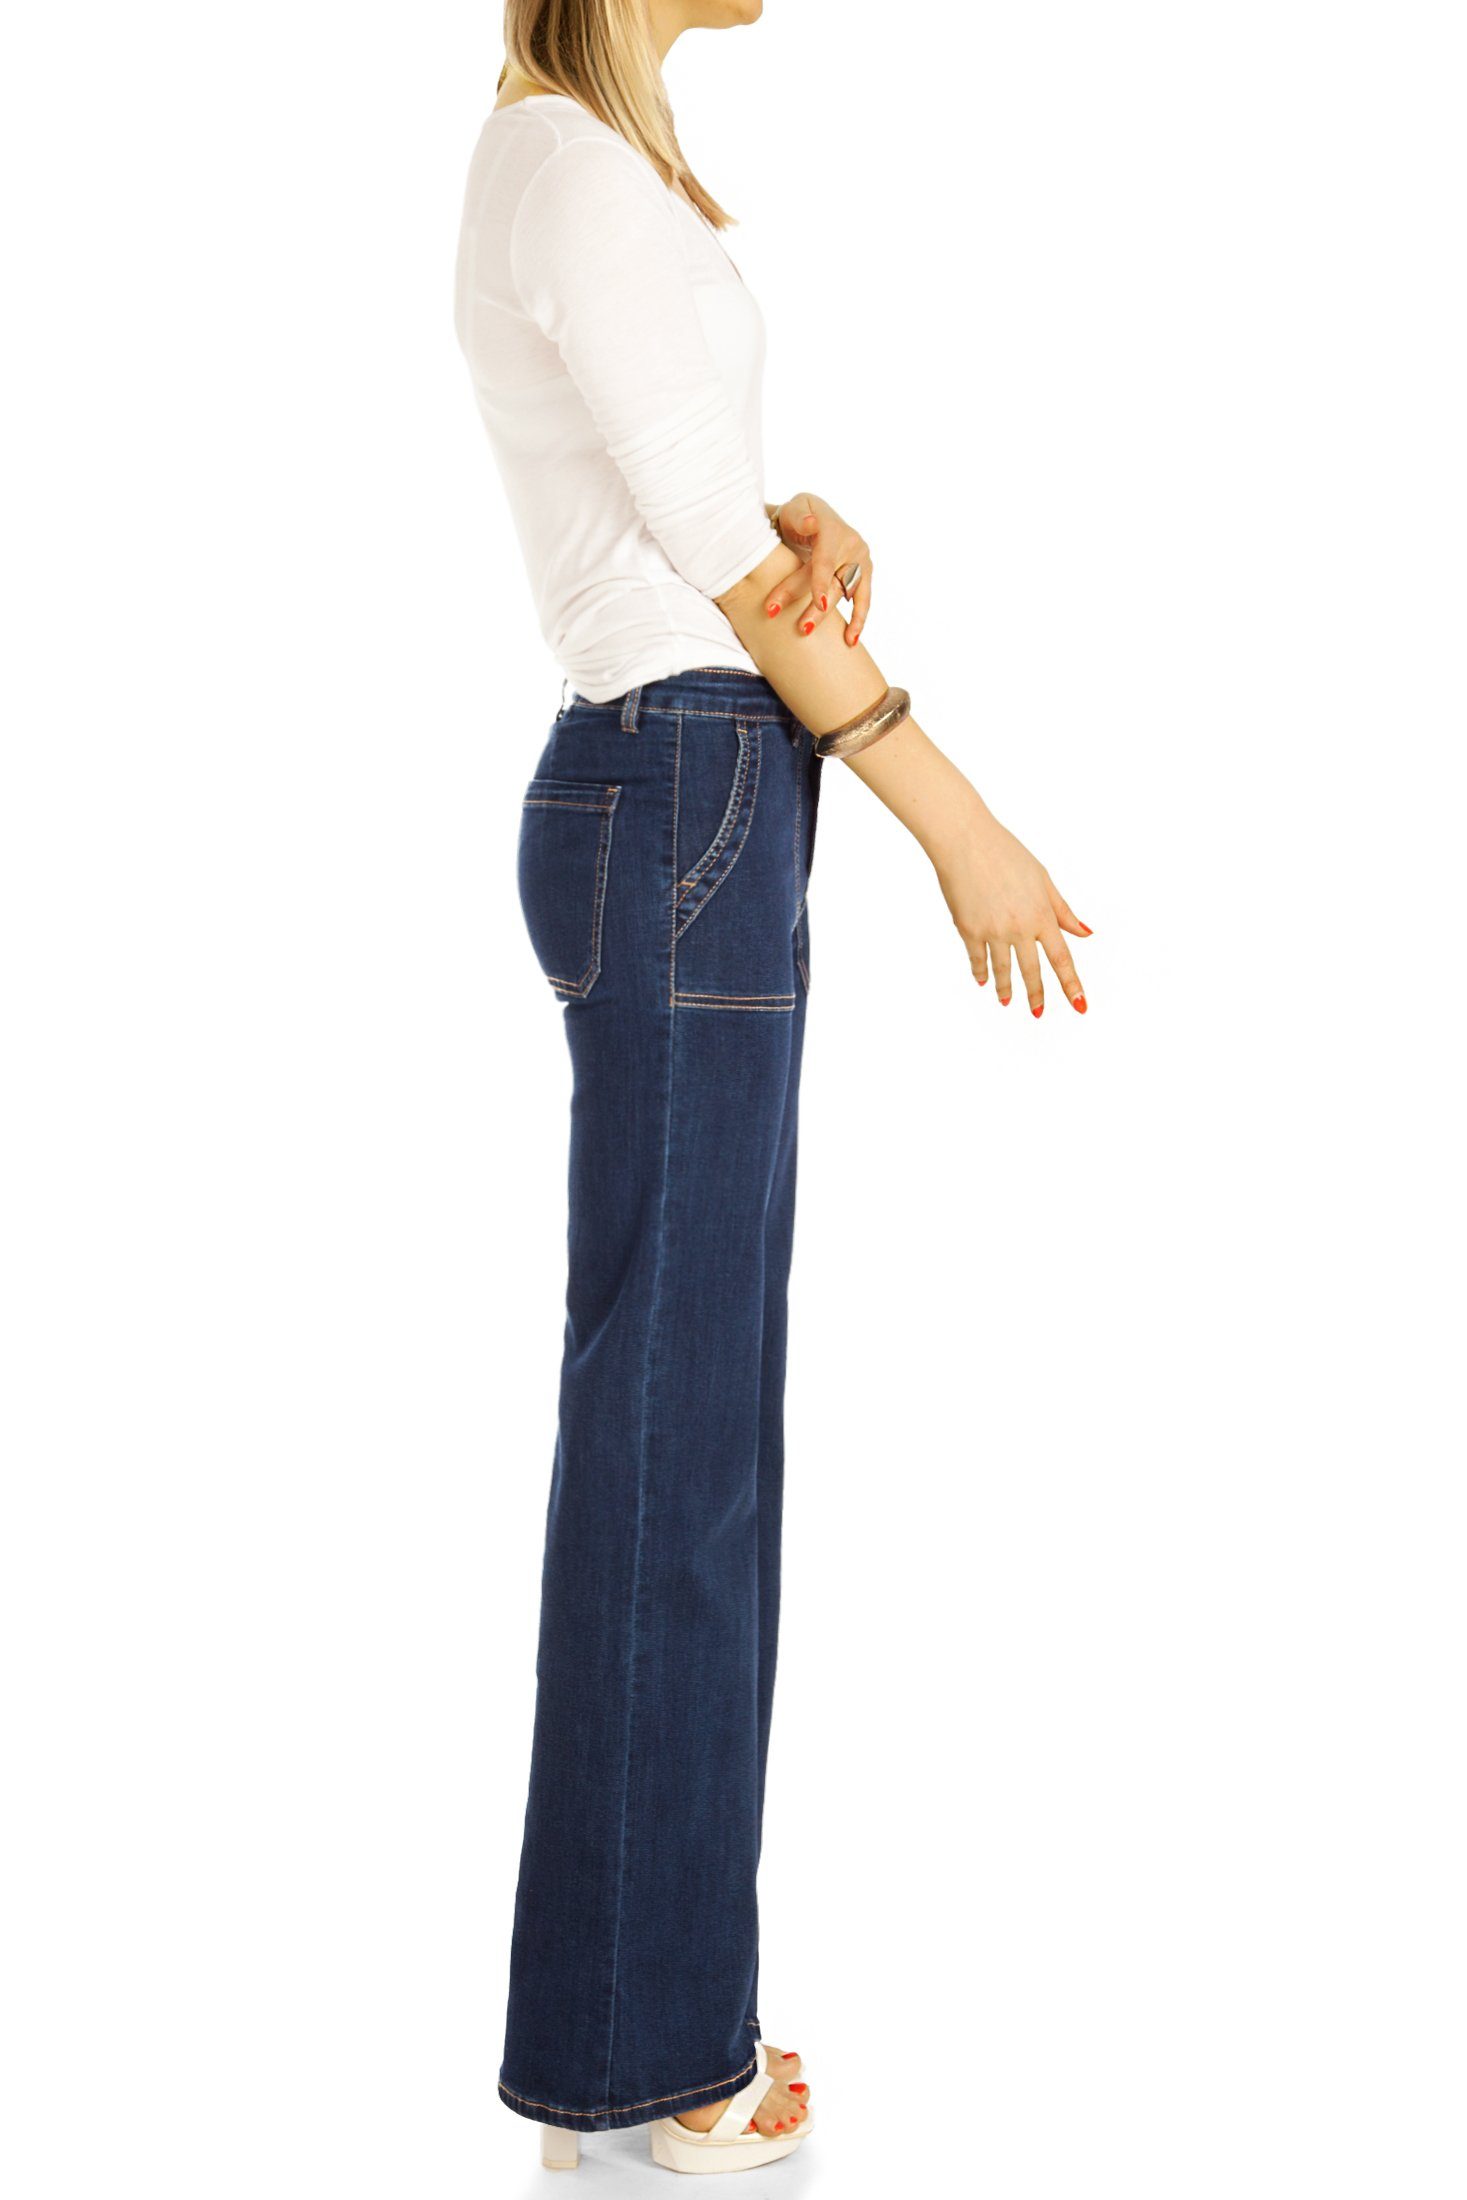 be styled Bootcut-Jeans Bootcut Jeans, waist dunkelblau j31k 5-Pocket-Style straight medium - Damen Passform Stretch-Anteil, - Hosen mit